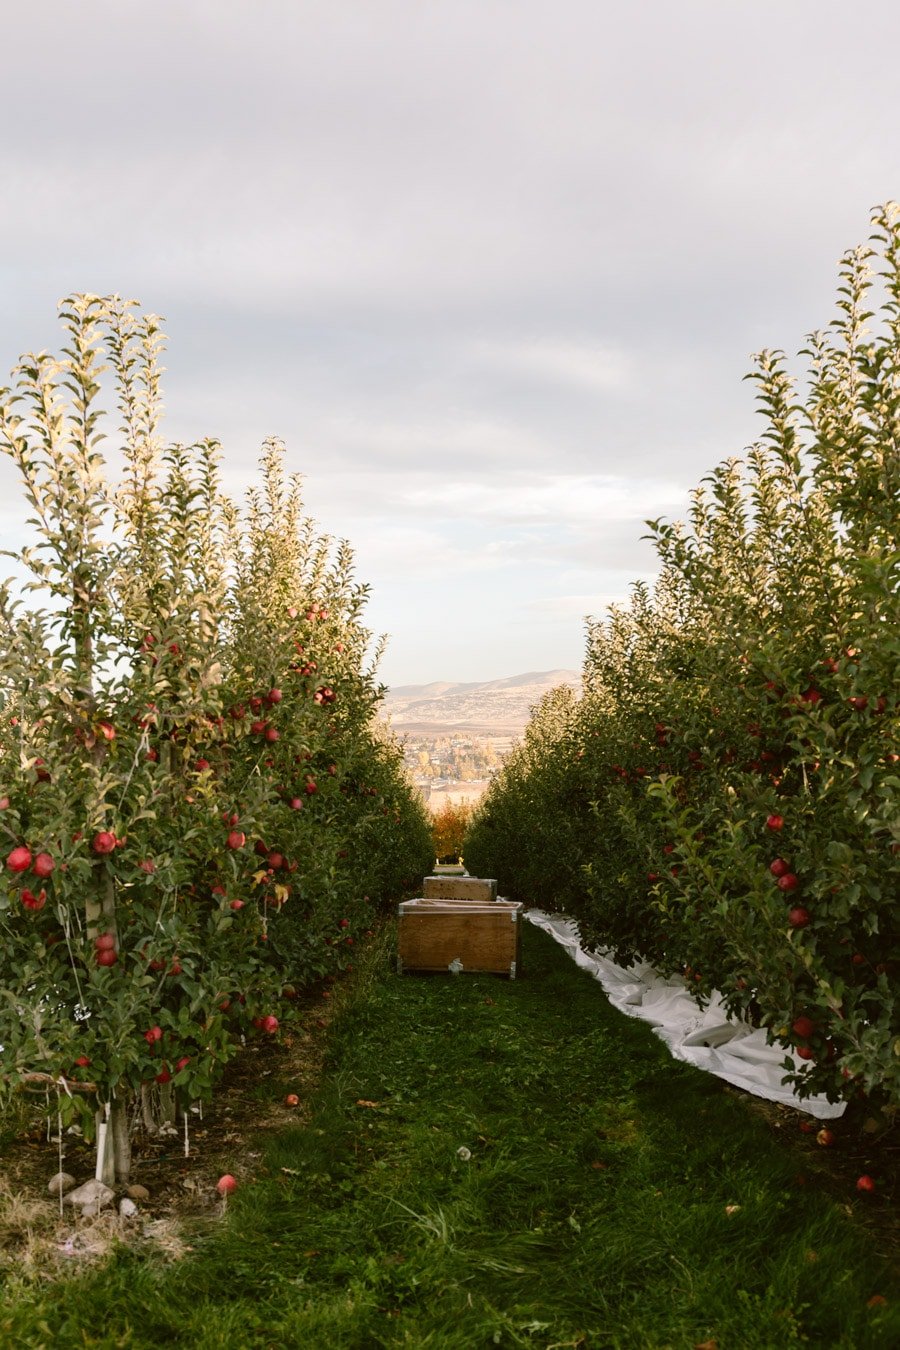 Showcasing the beautiful orchards of Autumn Glory Apples in Yakima Washington.